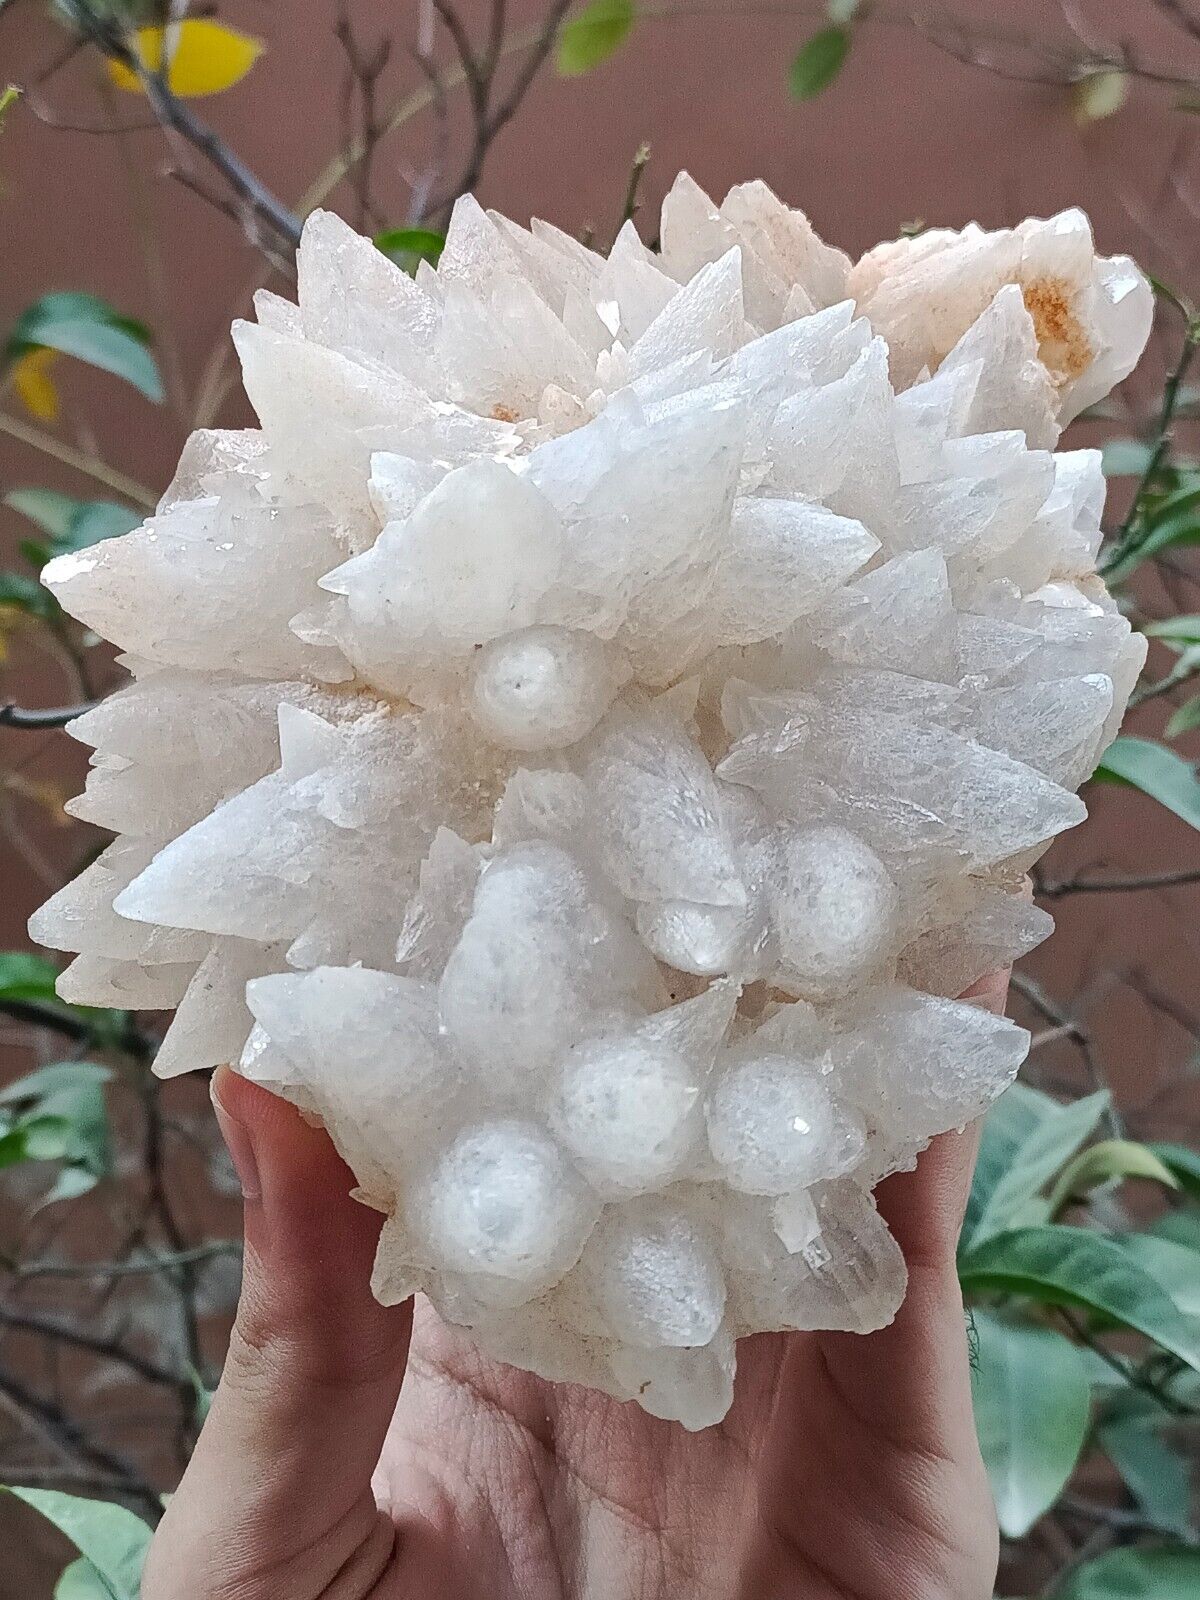 860g Natural Gemstone White Dog Tooth Calcite Cluster Mineral Specimen Crystal